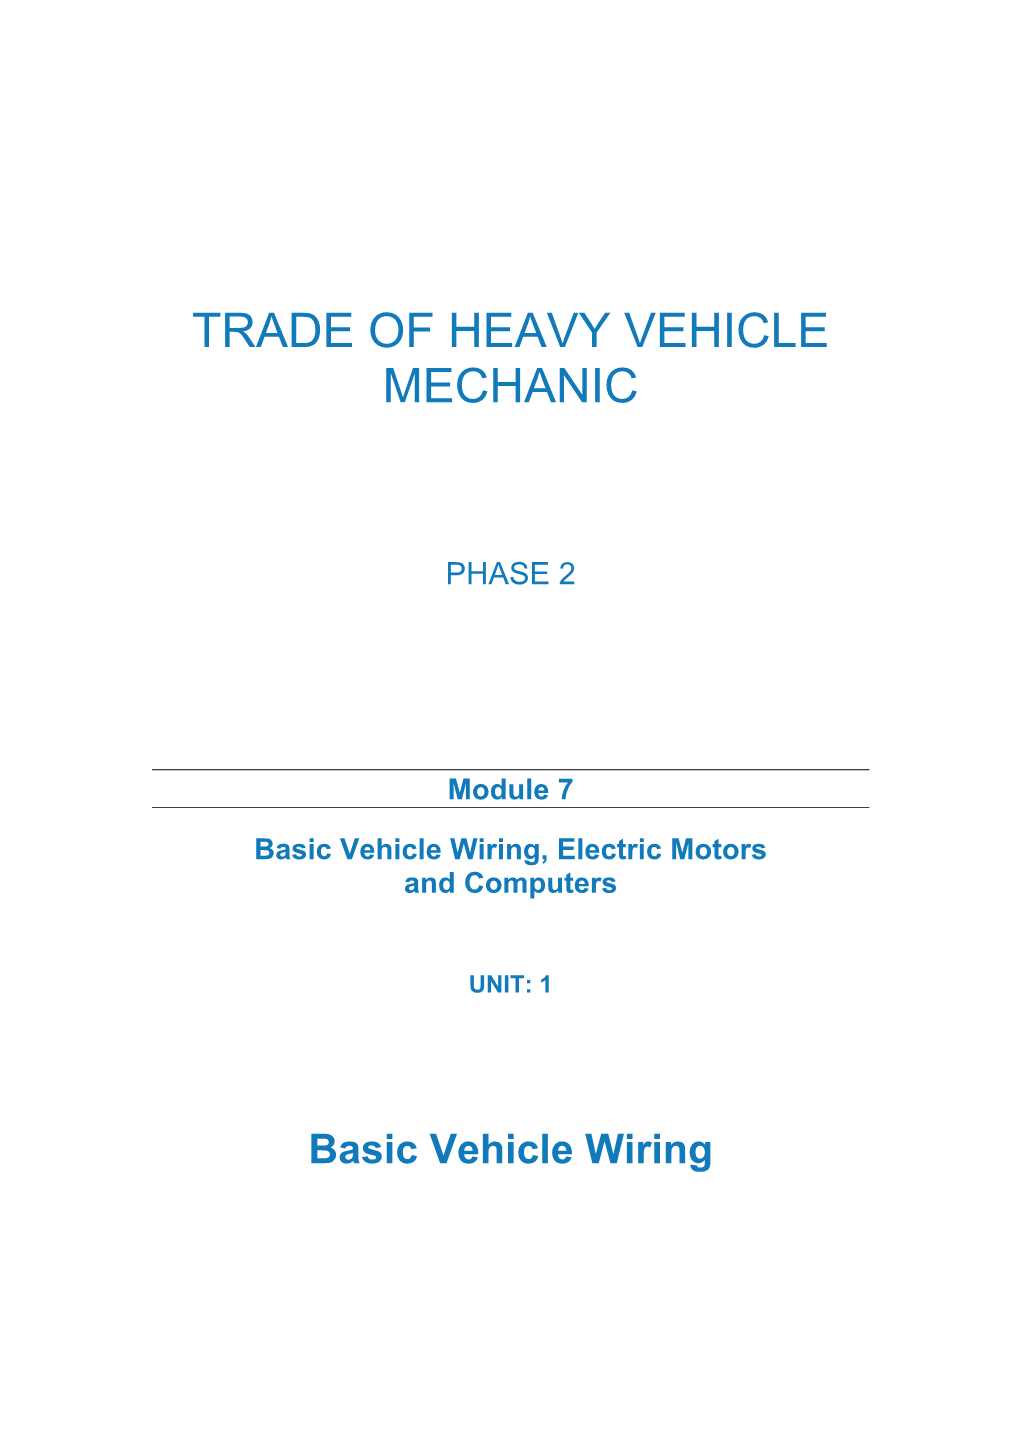 Trade of Heavy Vehicle Mechanic